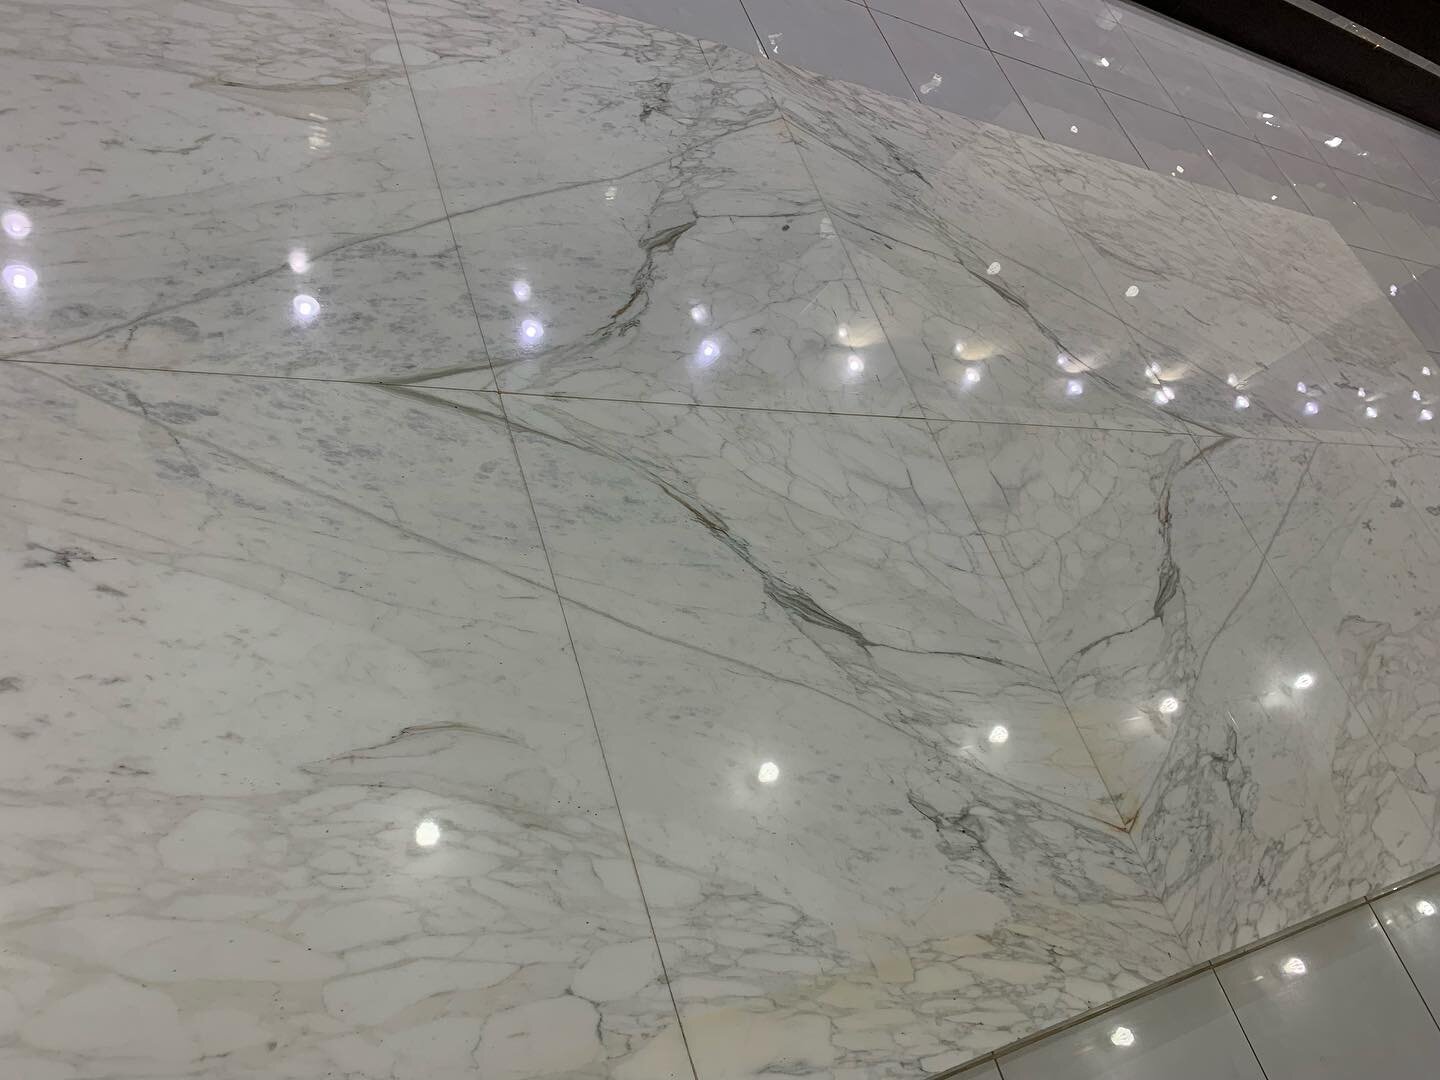 Available now in our warehouse - متوفر في مستودعاتنا 
- 
المورد الأفضل للرخام - .The Best Supplier Co
-
الرياض - طريق الخرج - Riyadh- Al Kharj Road
-
 Contact - للتواصل 
+966582035290
Email: marblebestsupplier@gmail.com
-
-
-
-
-
-
-
-
 #marble #رخا